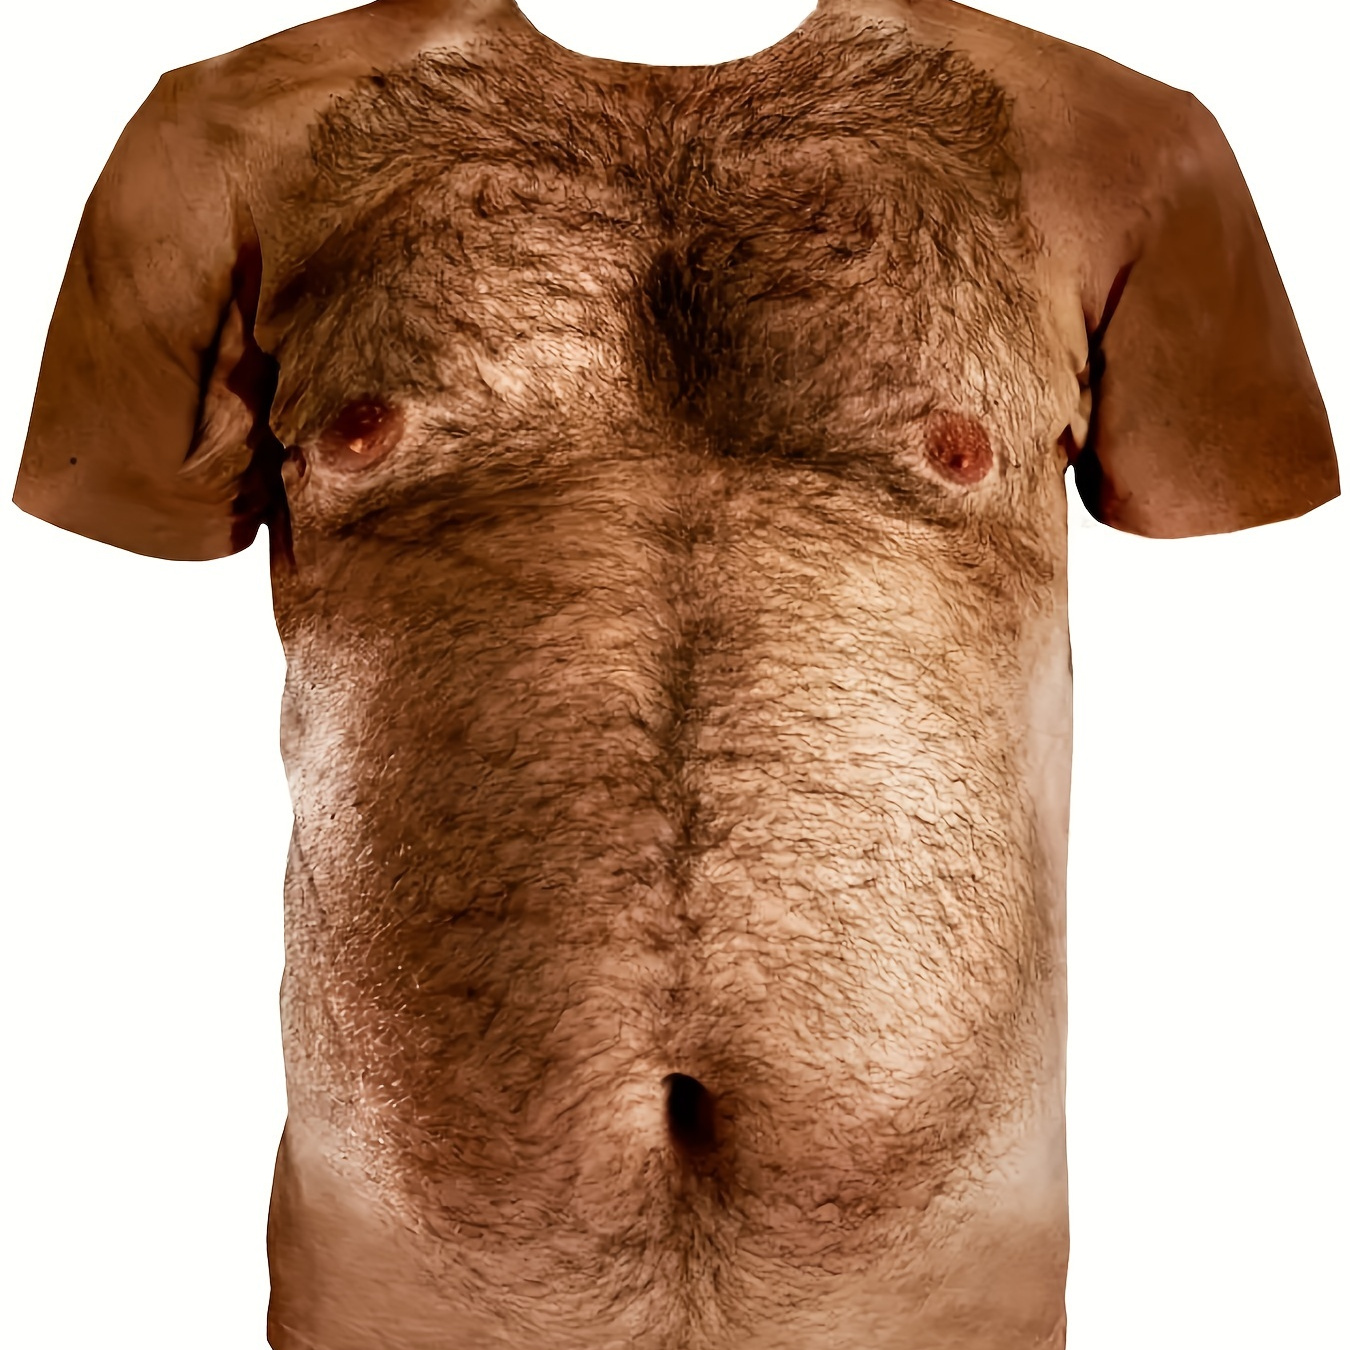 

Men's Abdomen Print T-shirt, Casual Short Sleeve Crew Neck Tee, Men's Clothing For Outdoor